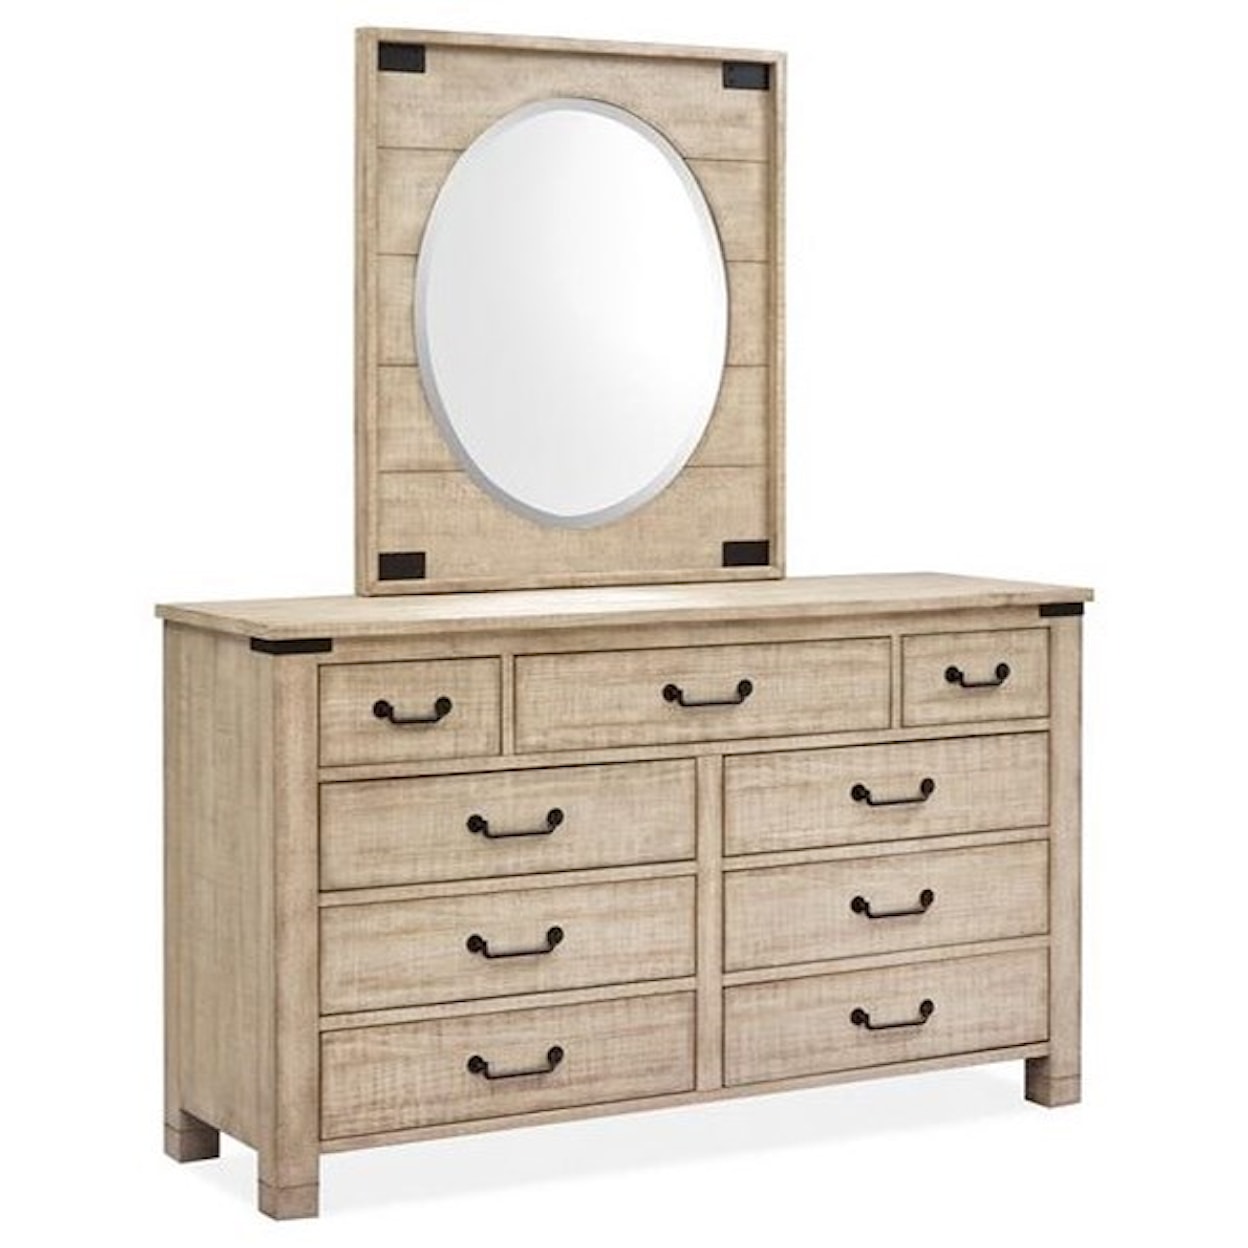 Magnussen Home Radcliffe Bedroom Dresser with Oval Portrait  Mirror